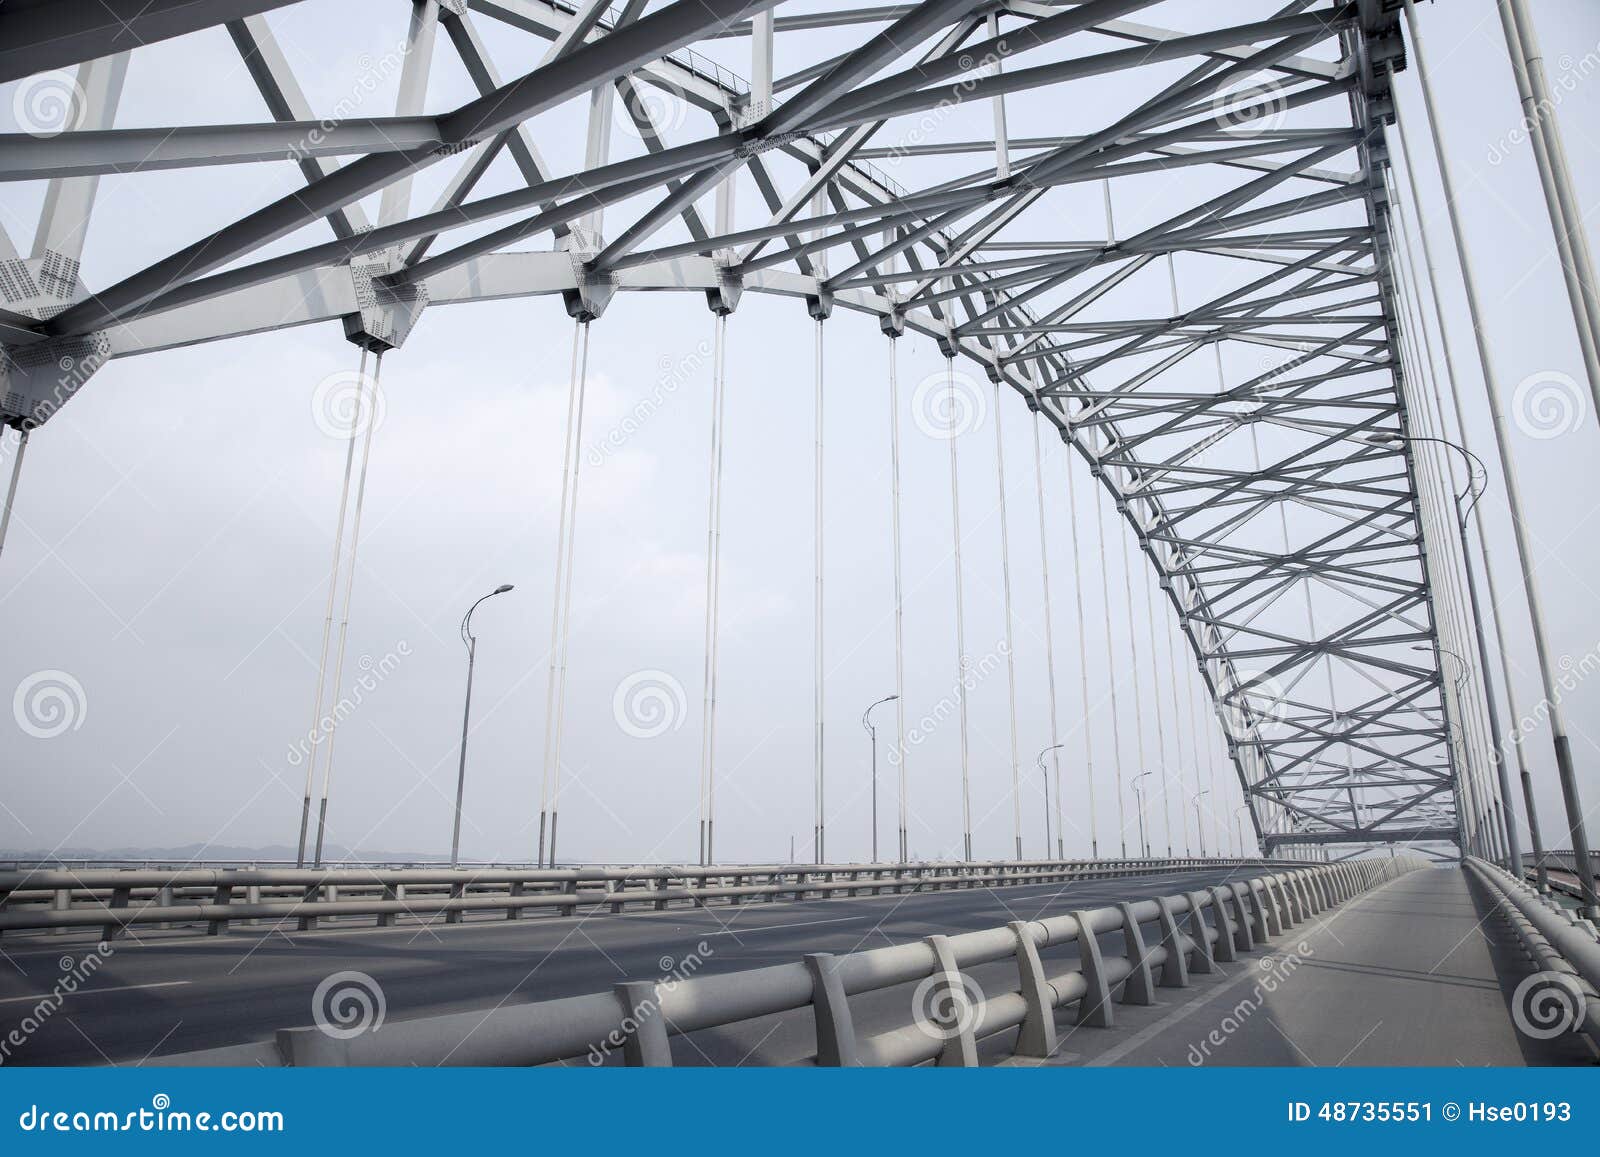 steel truss arch bridge